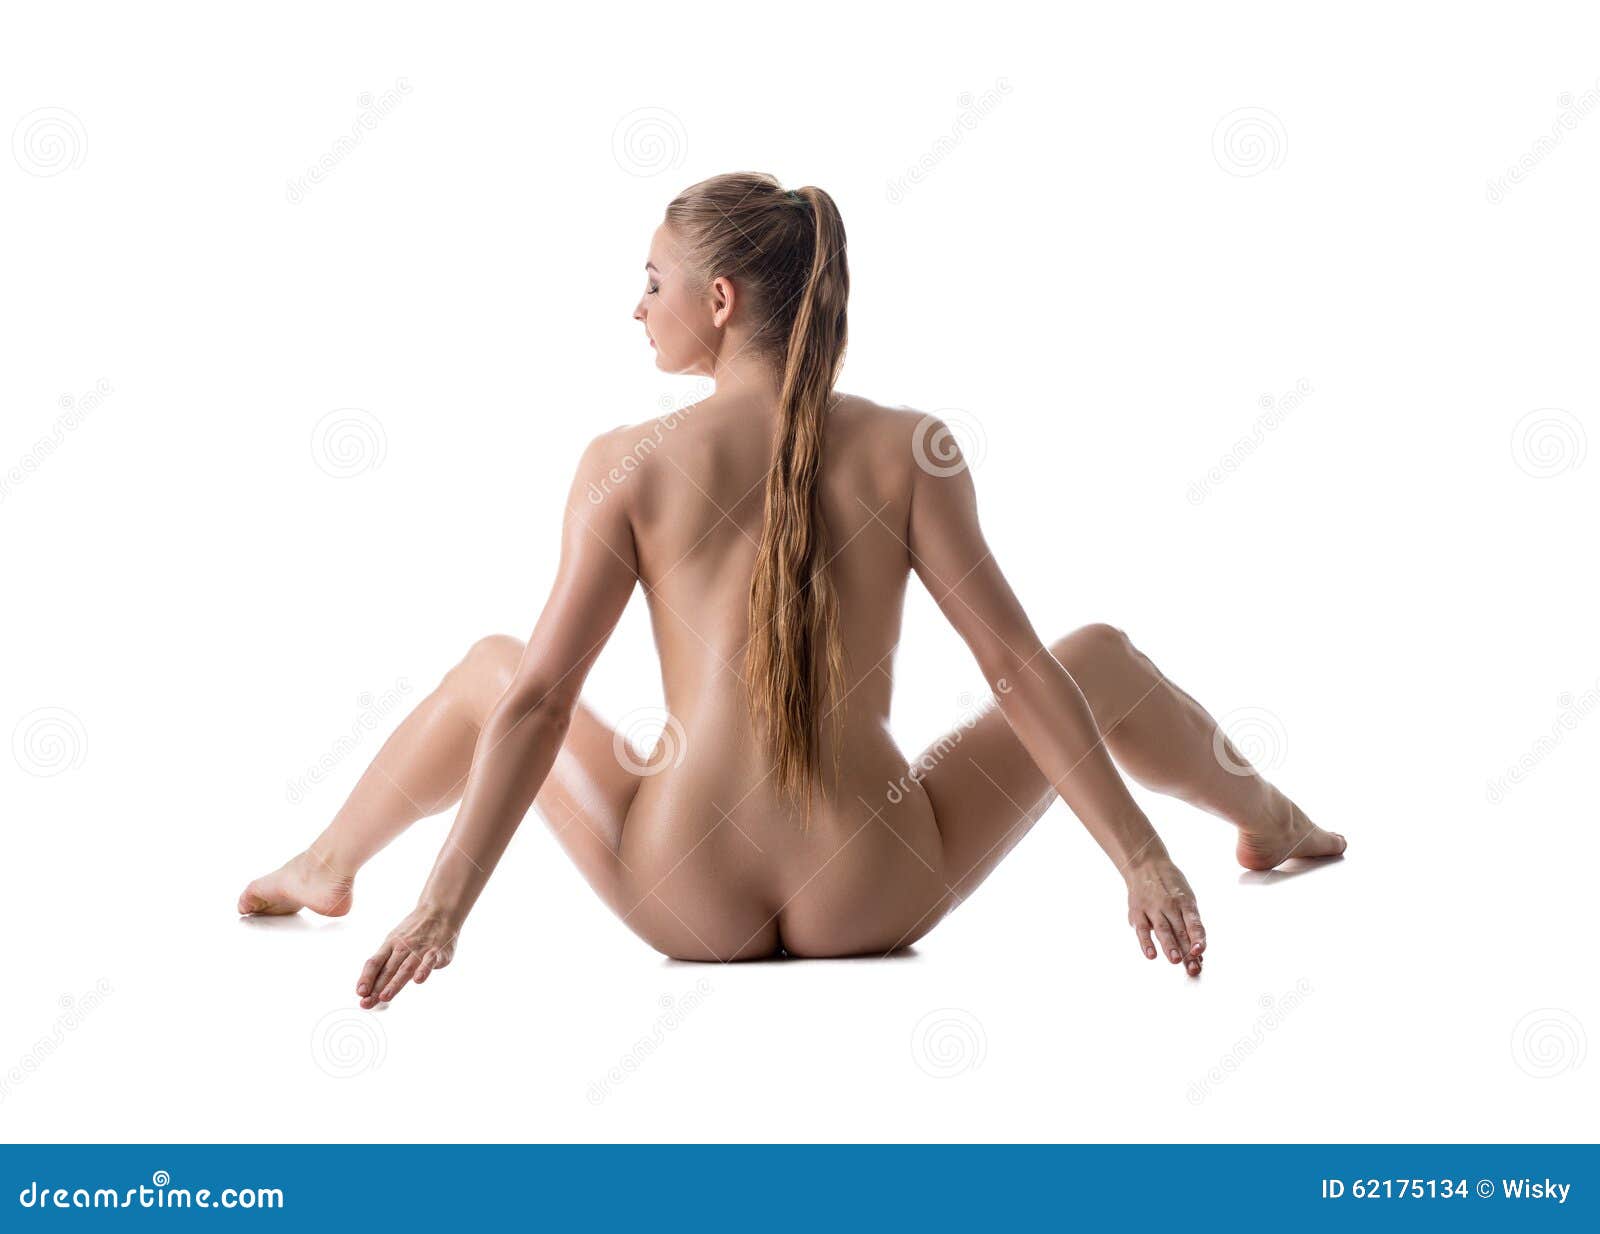 Nude Girl Spreading Legs